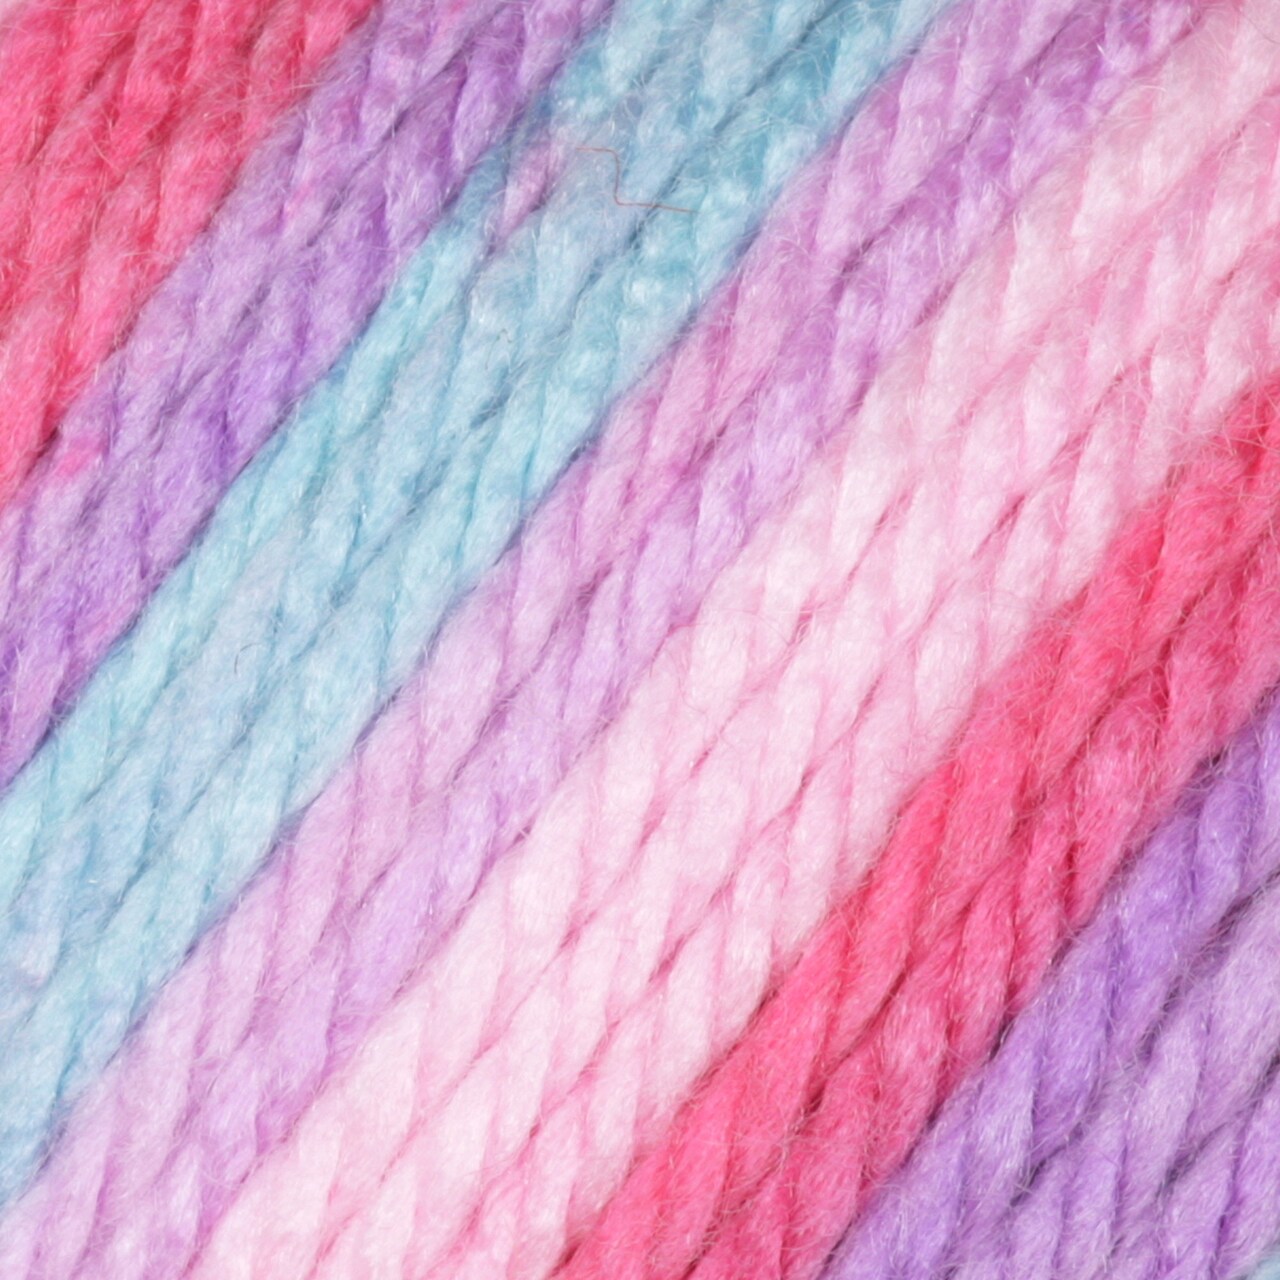 Caron Simply Soft Stripes Yarn, Times Square